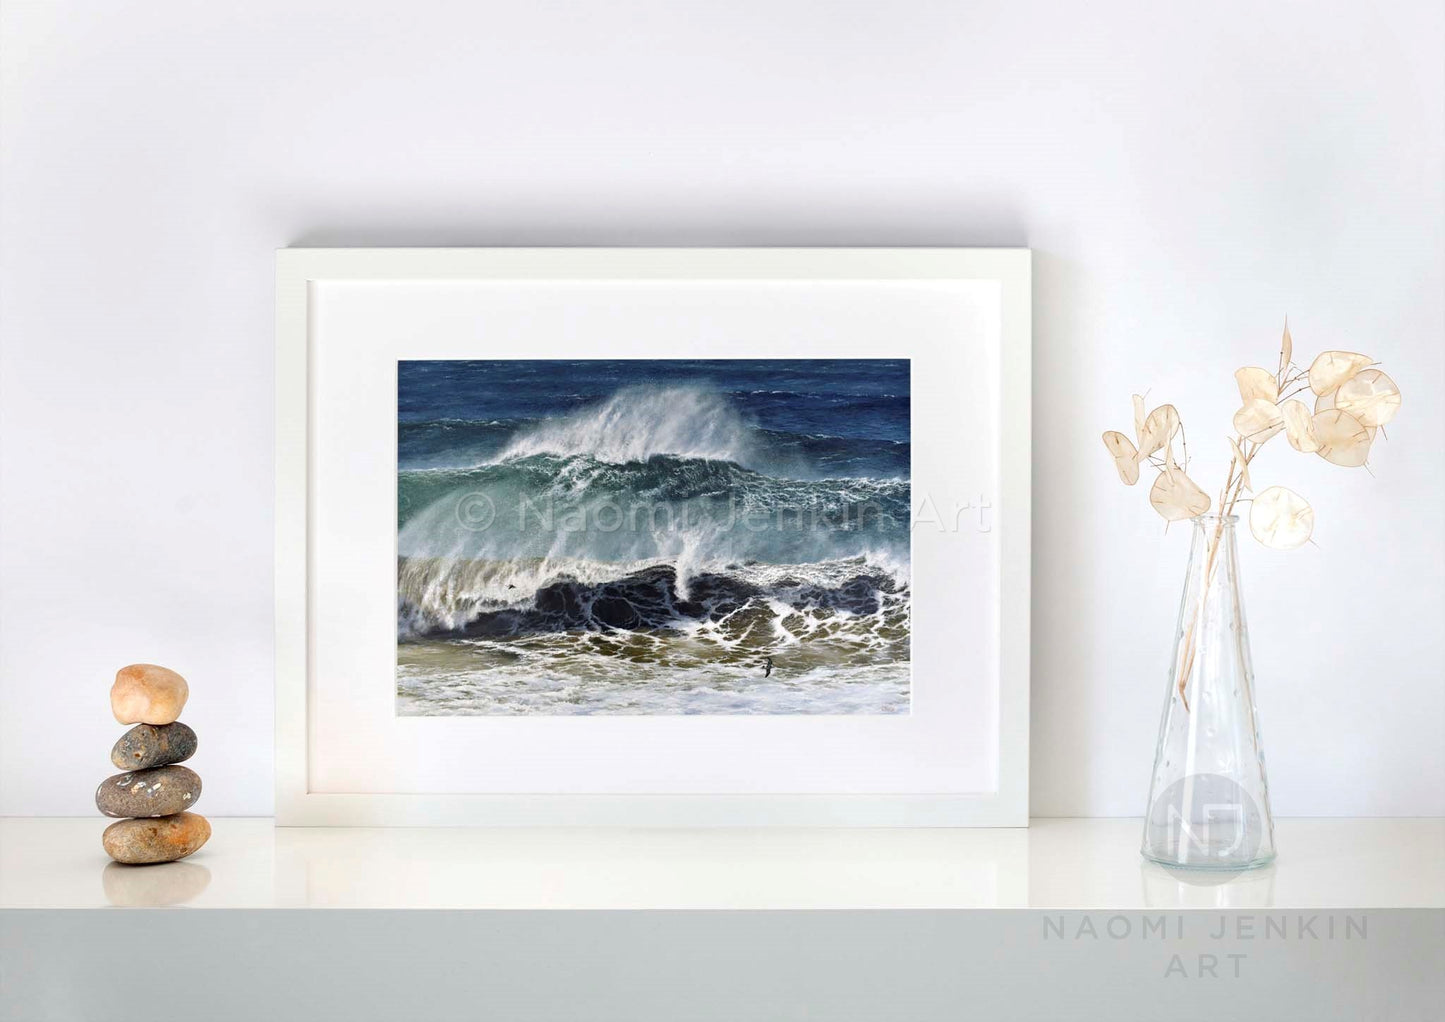 Fine art print of a seascape painting by Naomi Jenkin Art. 